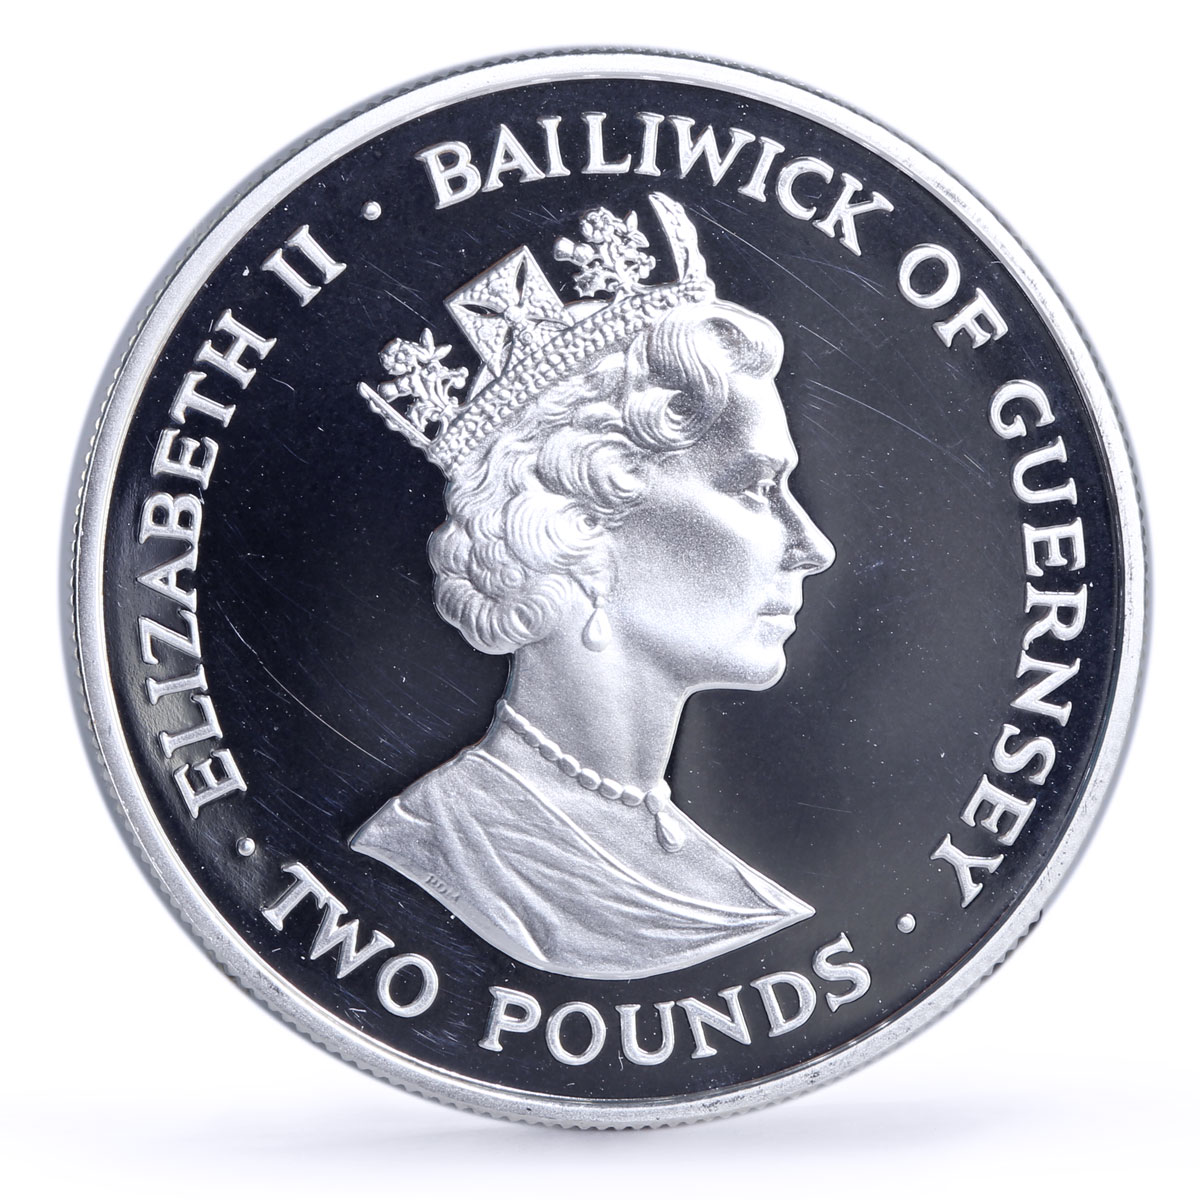 Bailiwick of Guernsey 2 pounds WWF Emperor Moth Butterfly Fauna silver coin 1997